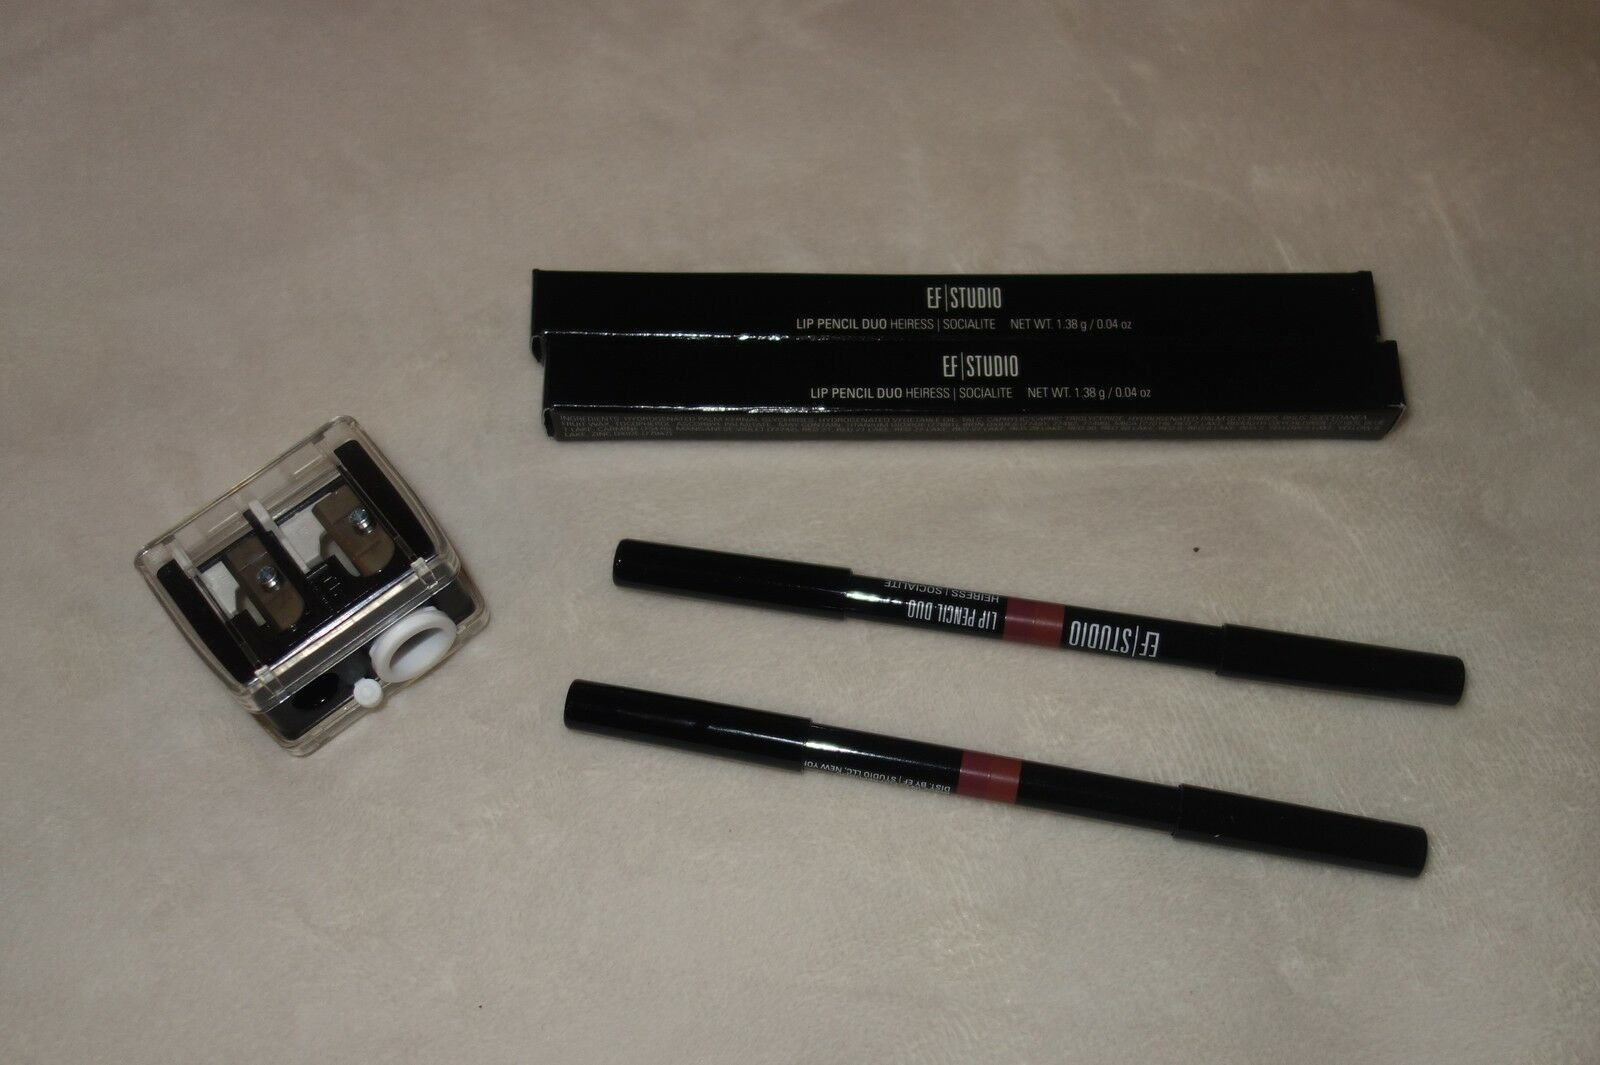 EF STUDIO lip Pencil duo heiress / socialite  2 pencils + pencil sharpener new - $22.80